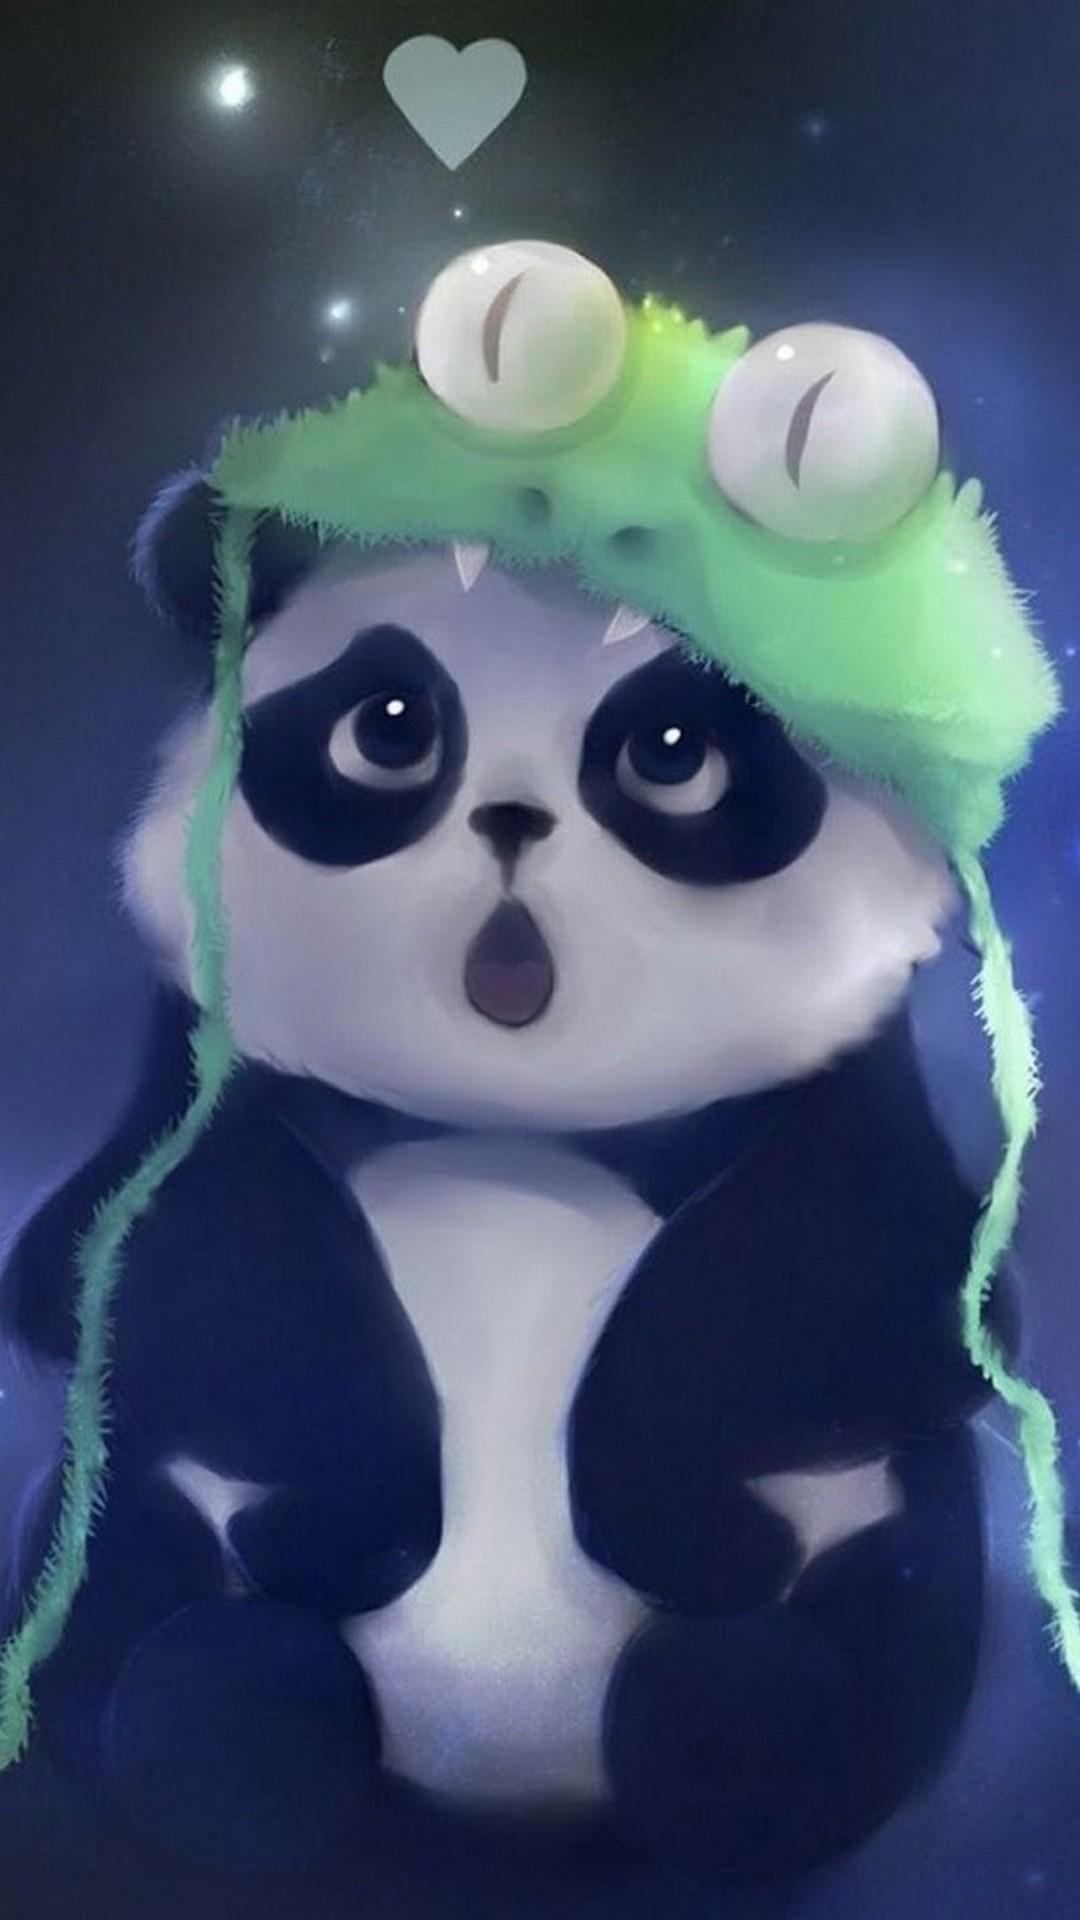 Cute Panda Android Wallpaper Android Wallpaper